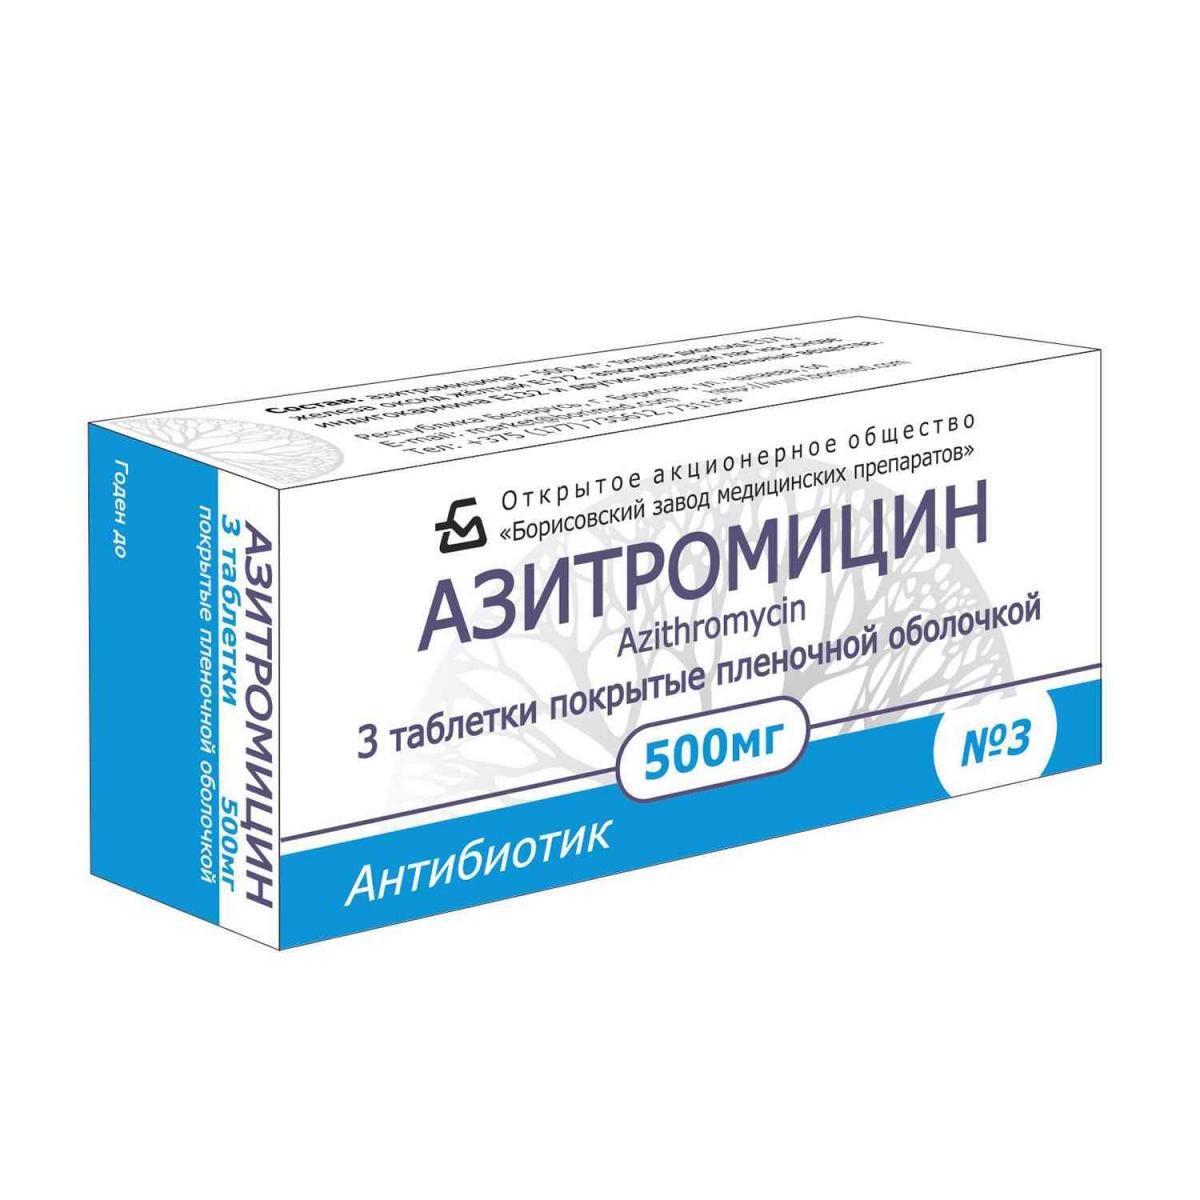 Азитромицин при лечении микоплазмы